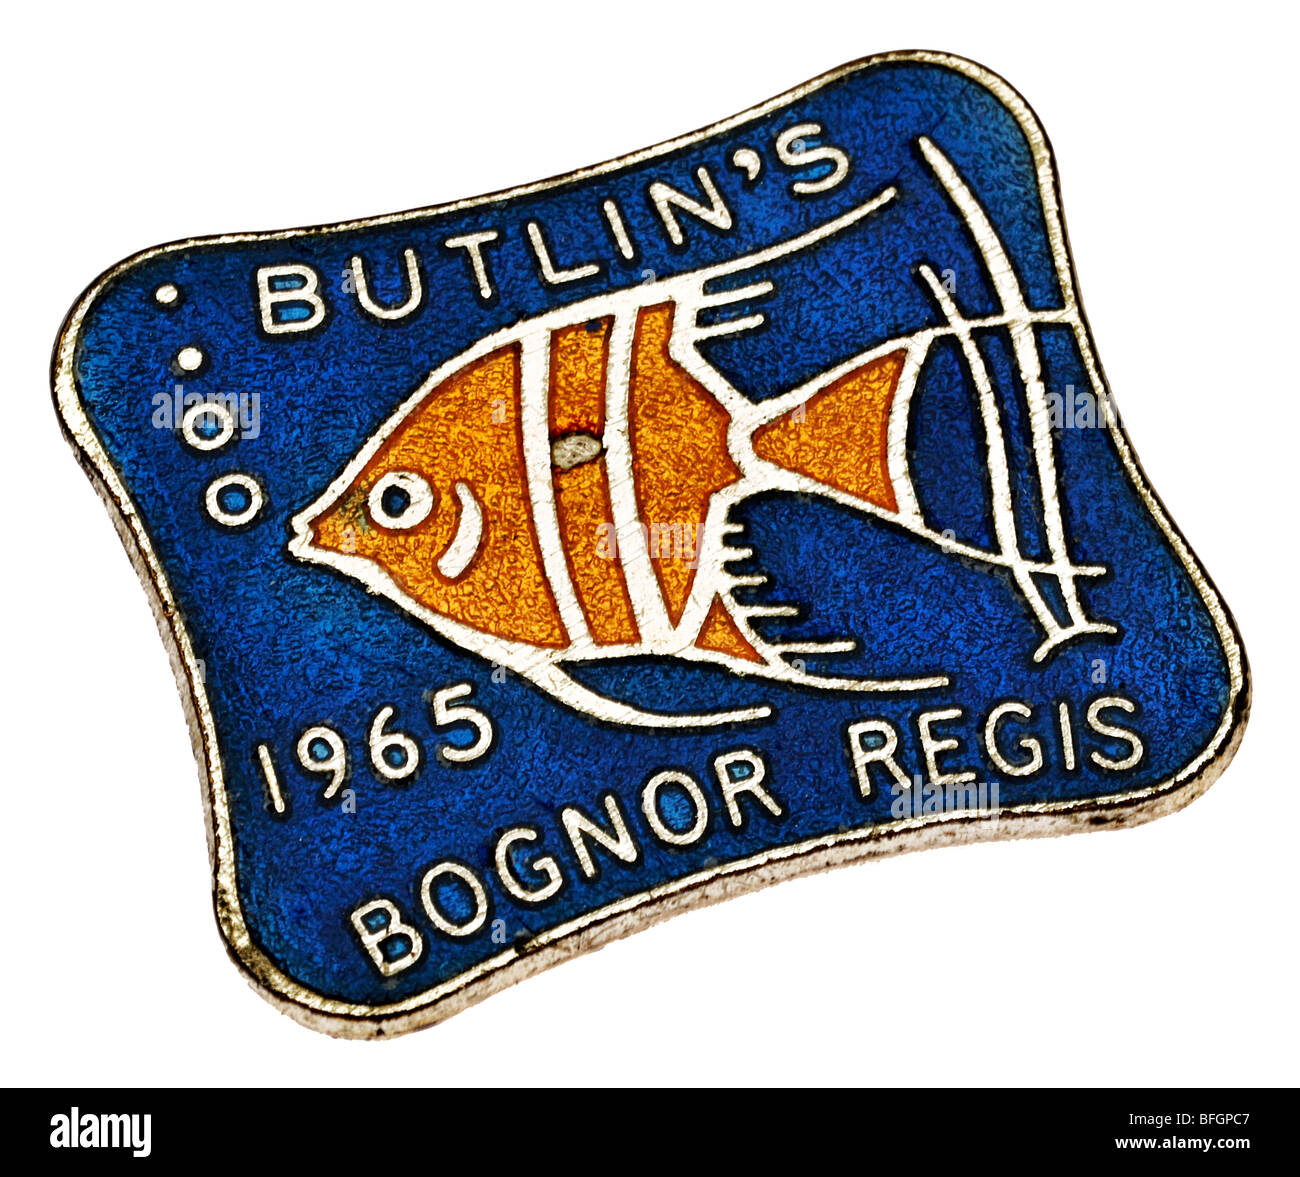 Butlins Holiday Camp, Bognor Regis 1965 enamel badge Stock Photo